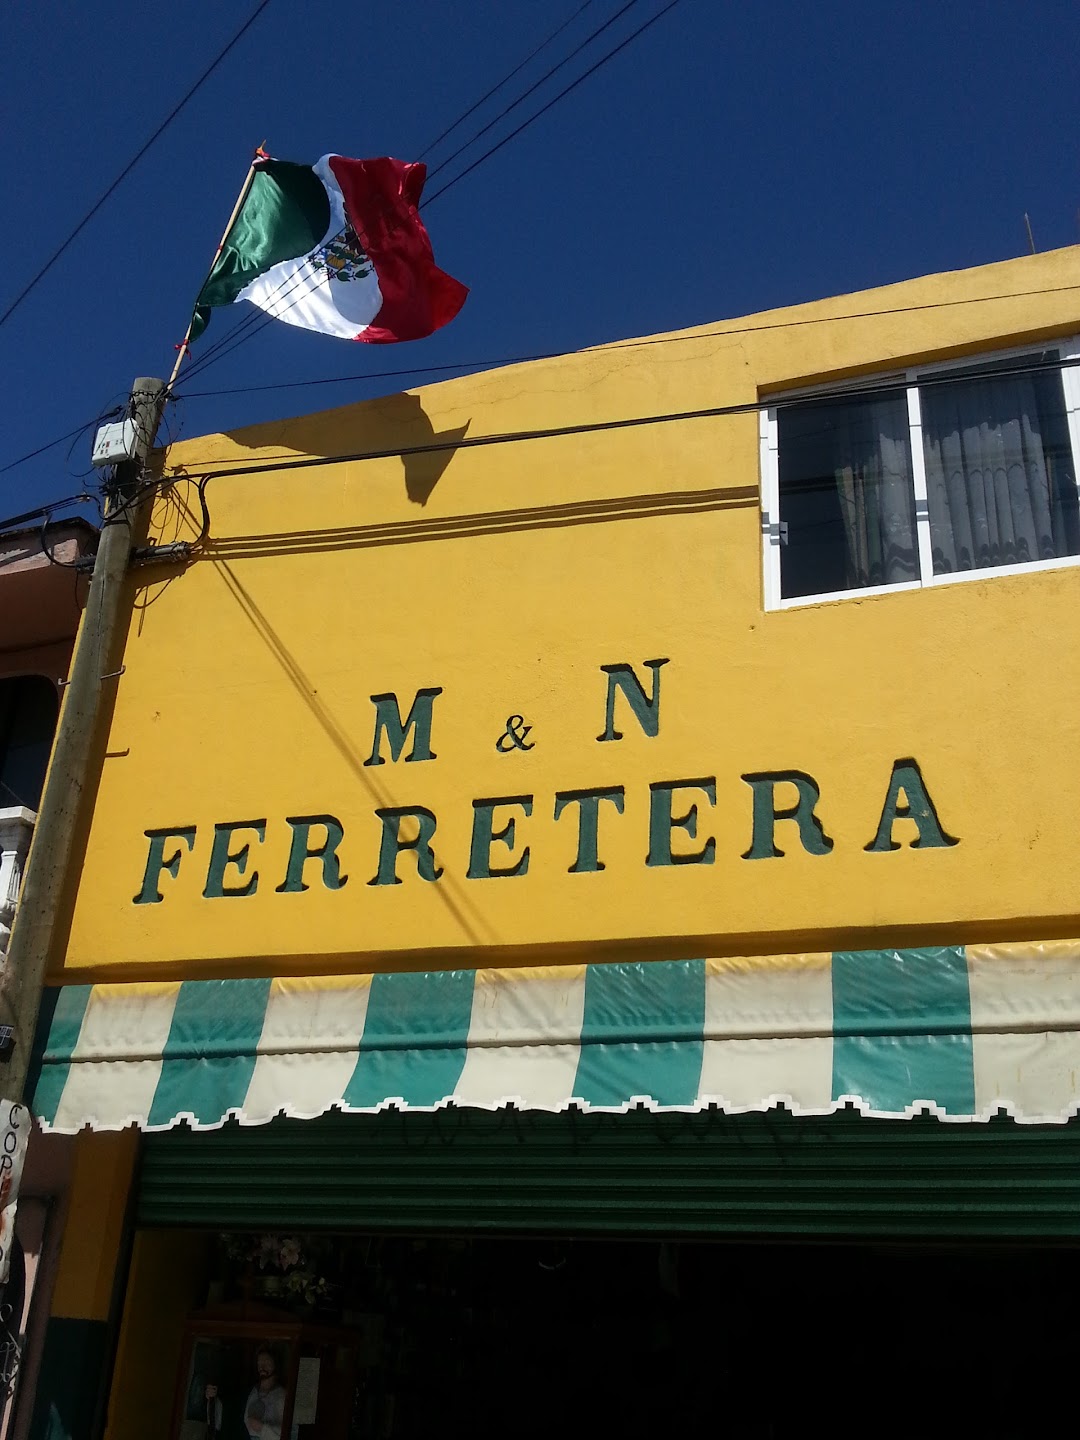 M&N Ferretera